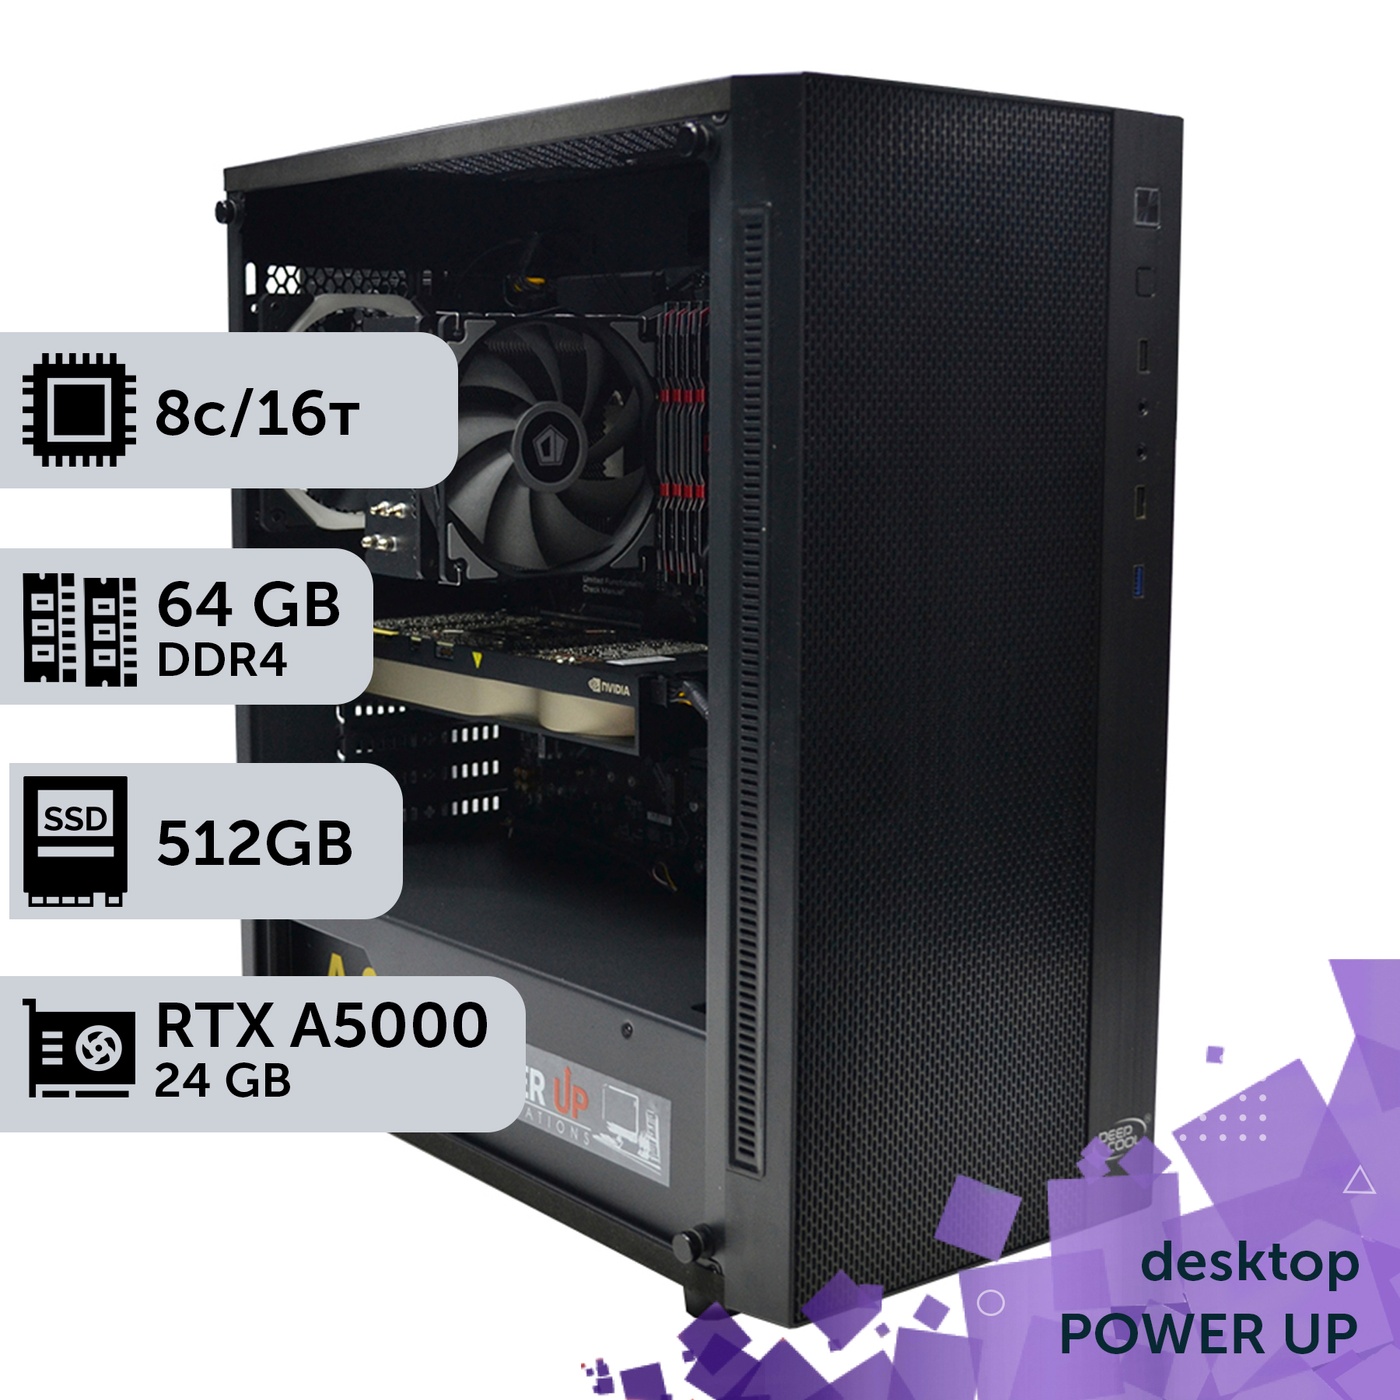 Рабочая станция PowerUp Desktop #84 Core i7 10700K/64 GB/HDD 1 TB/SSD 512GB/NVIDIA Quadro RTX A5000 24GB